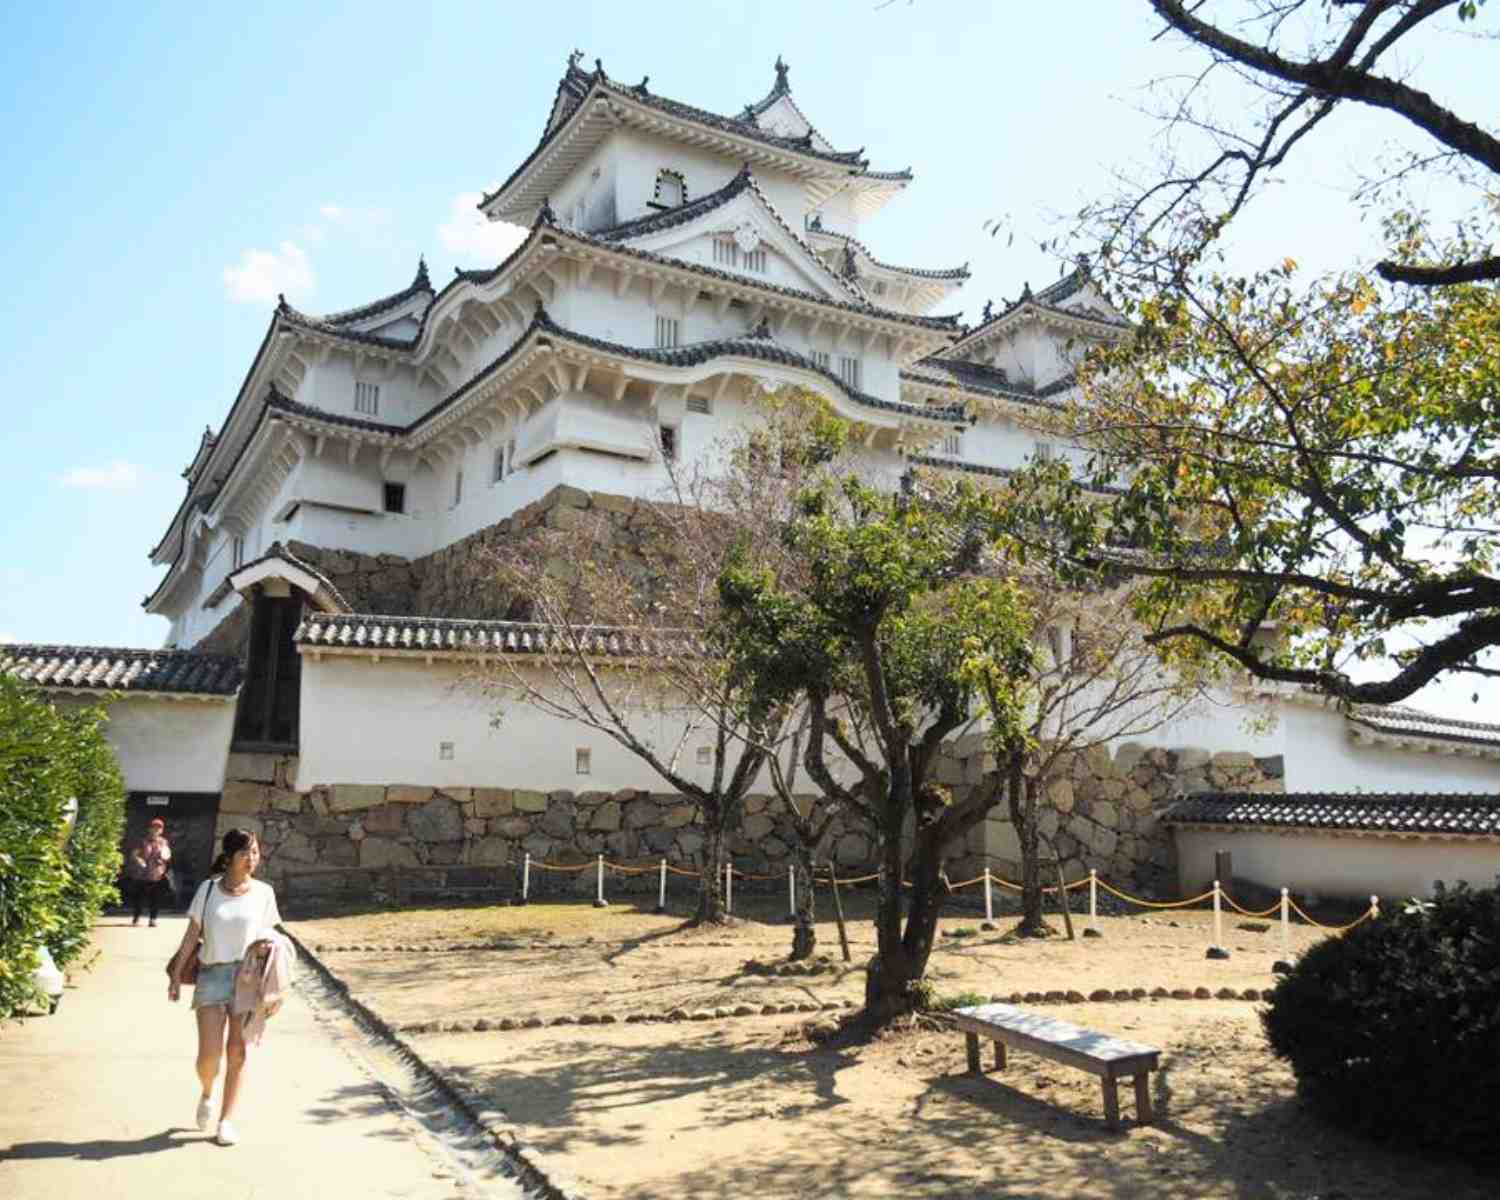 The glory of Himeji Castle in Japan